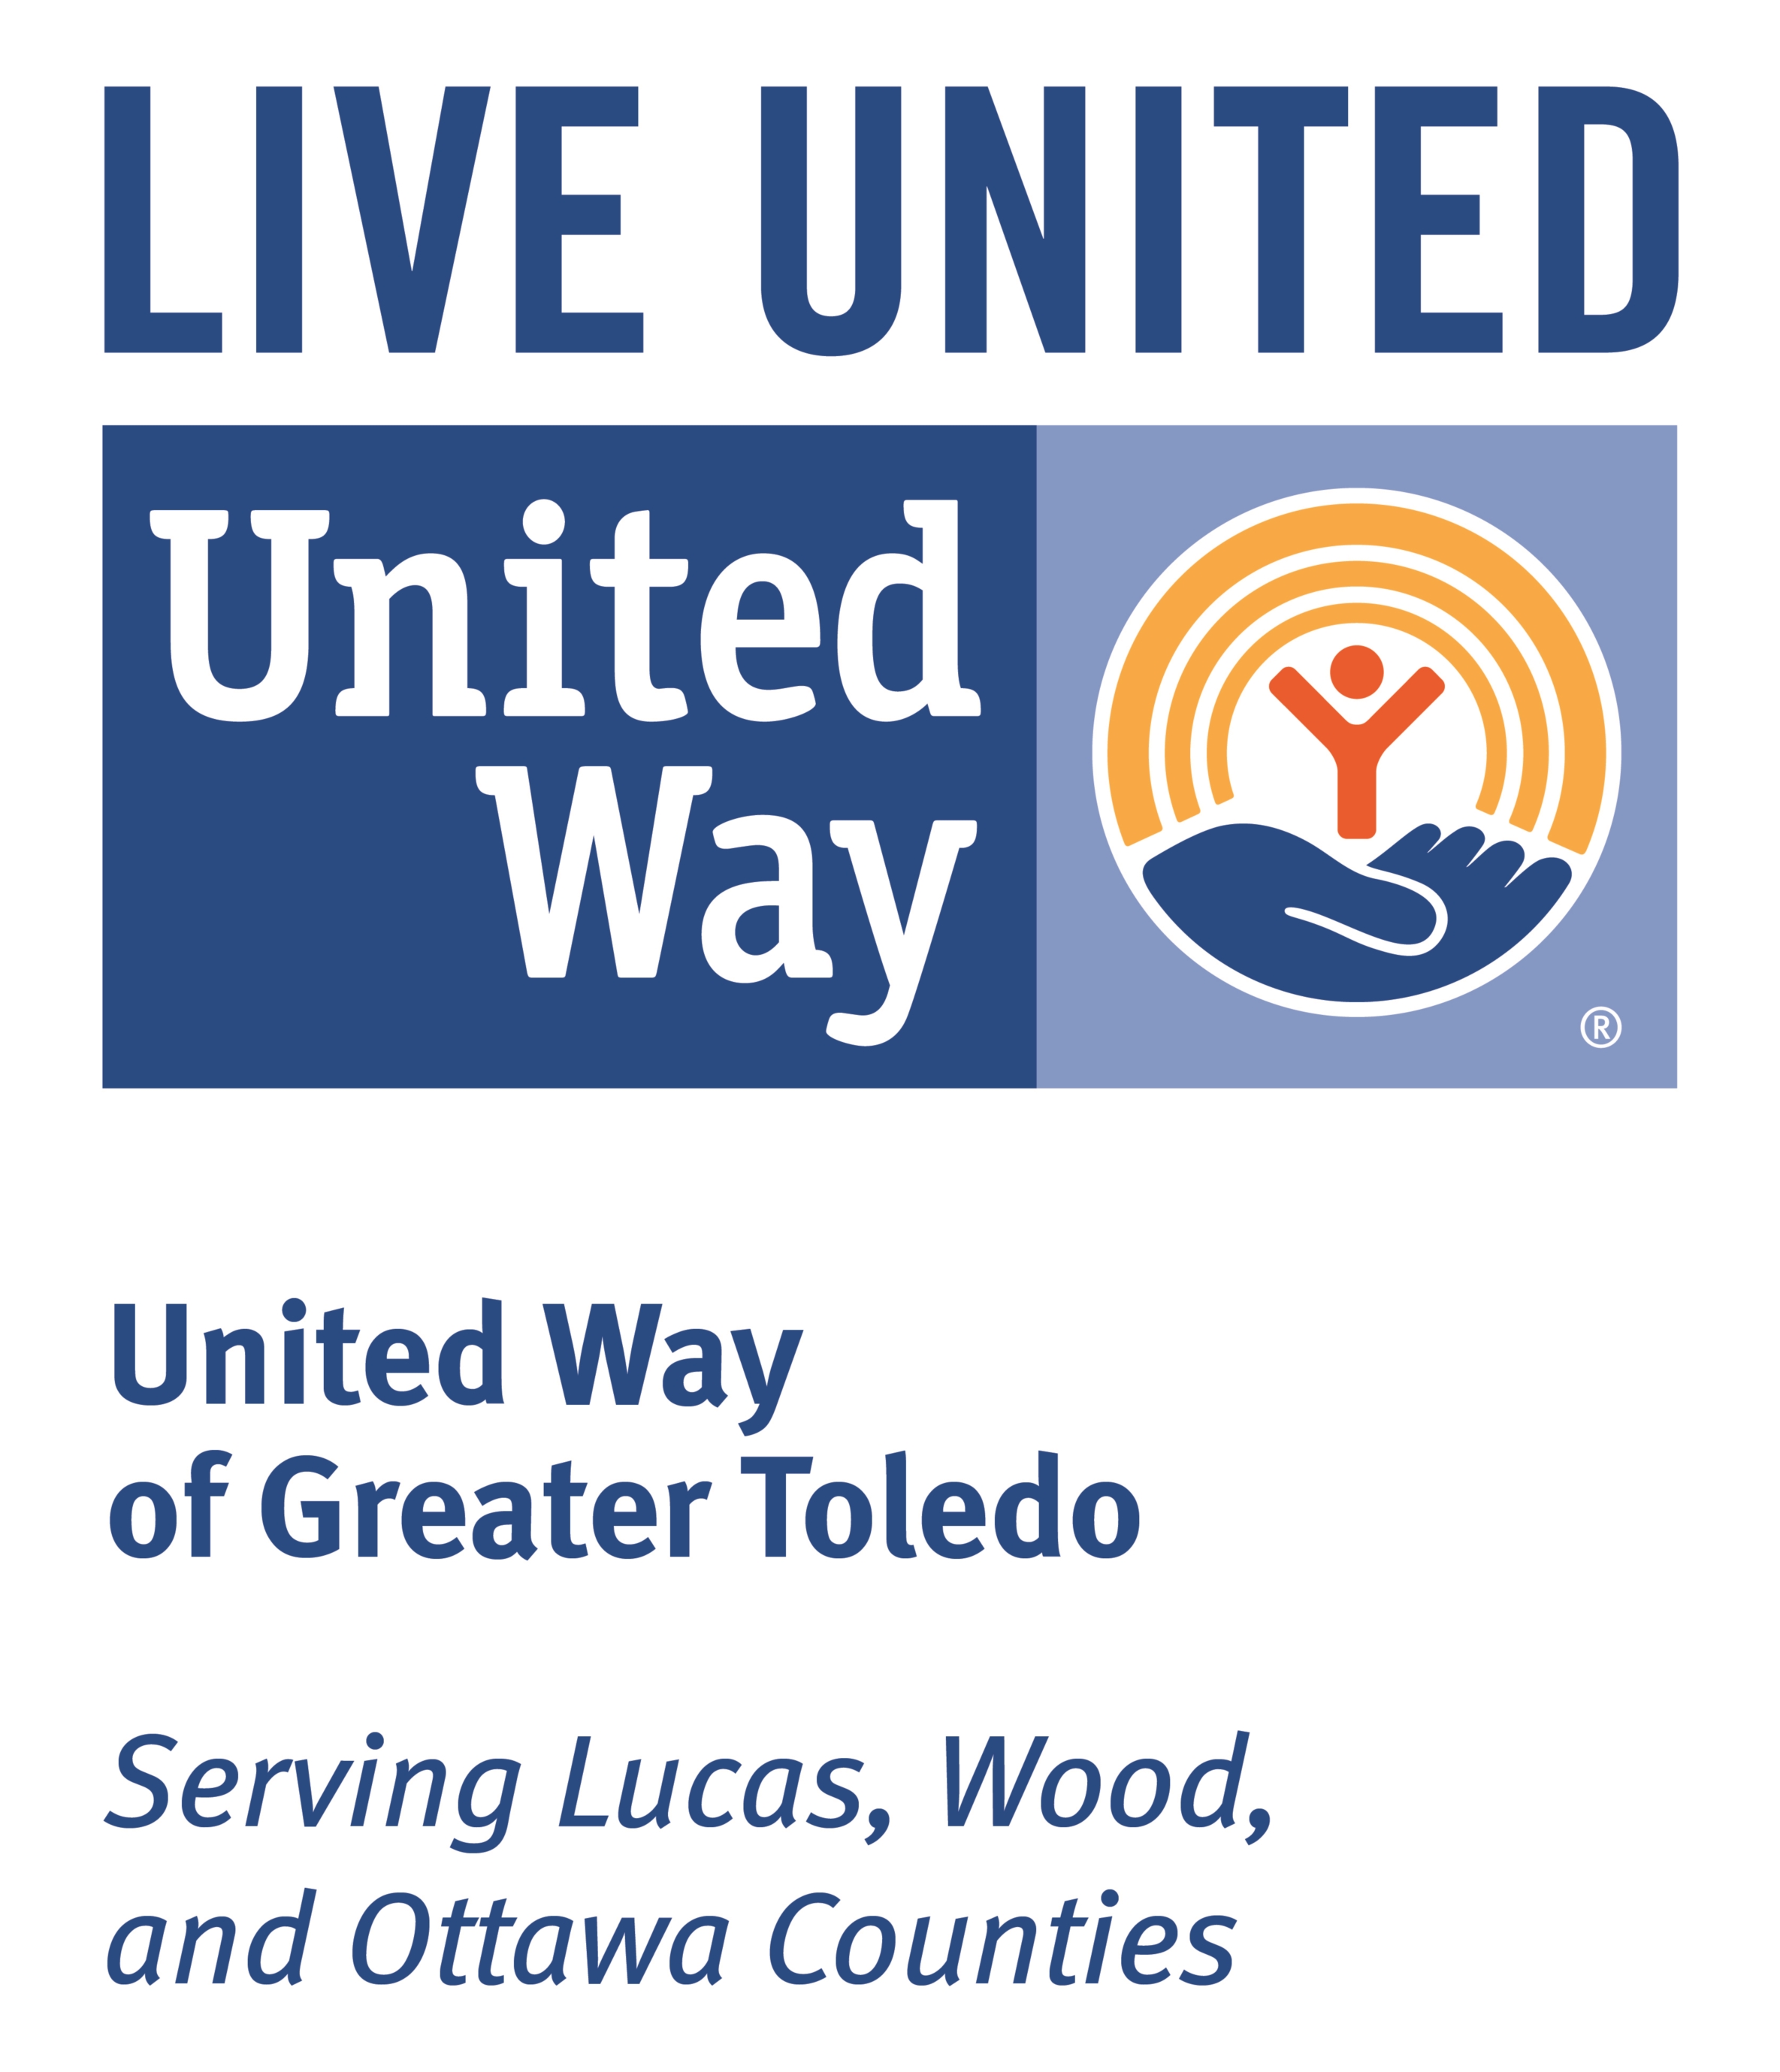 United Way of Greater Toledo logo